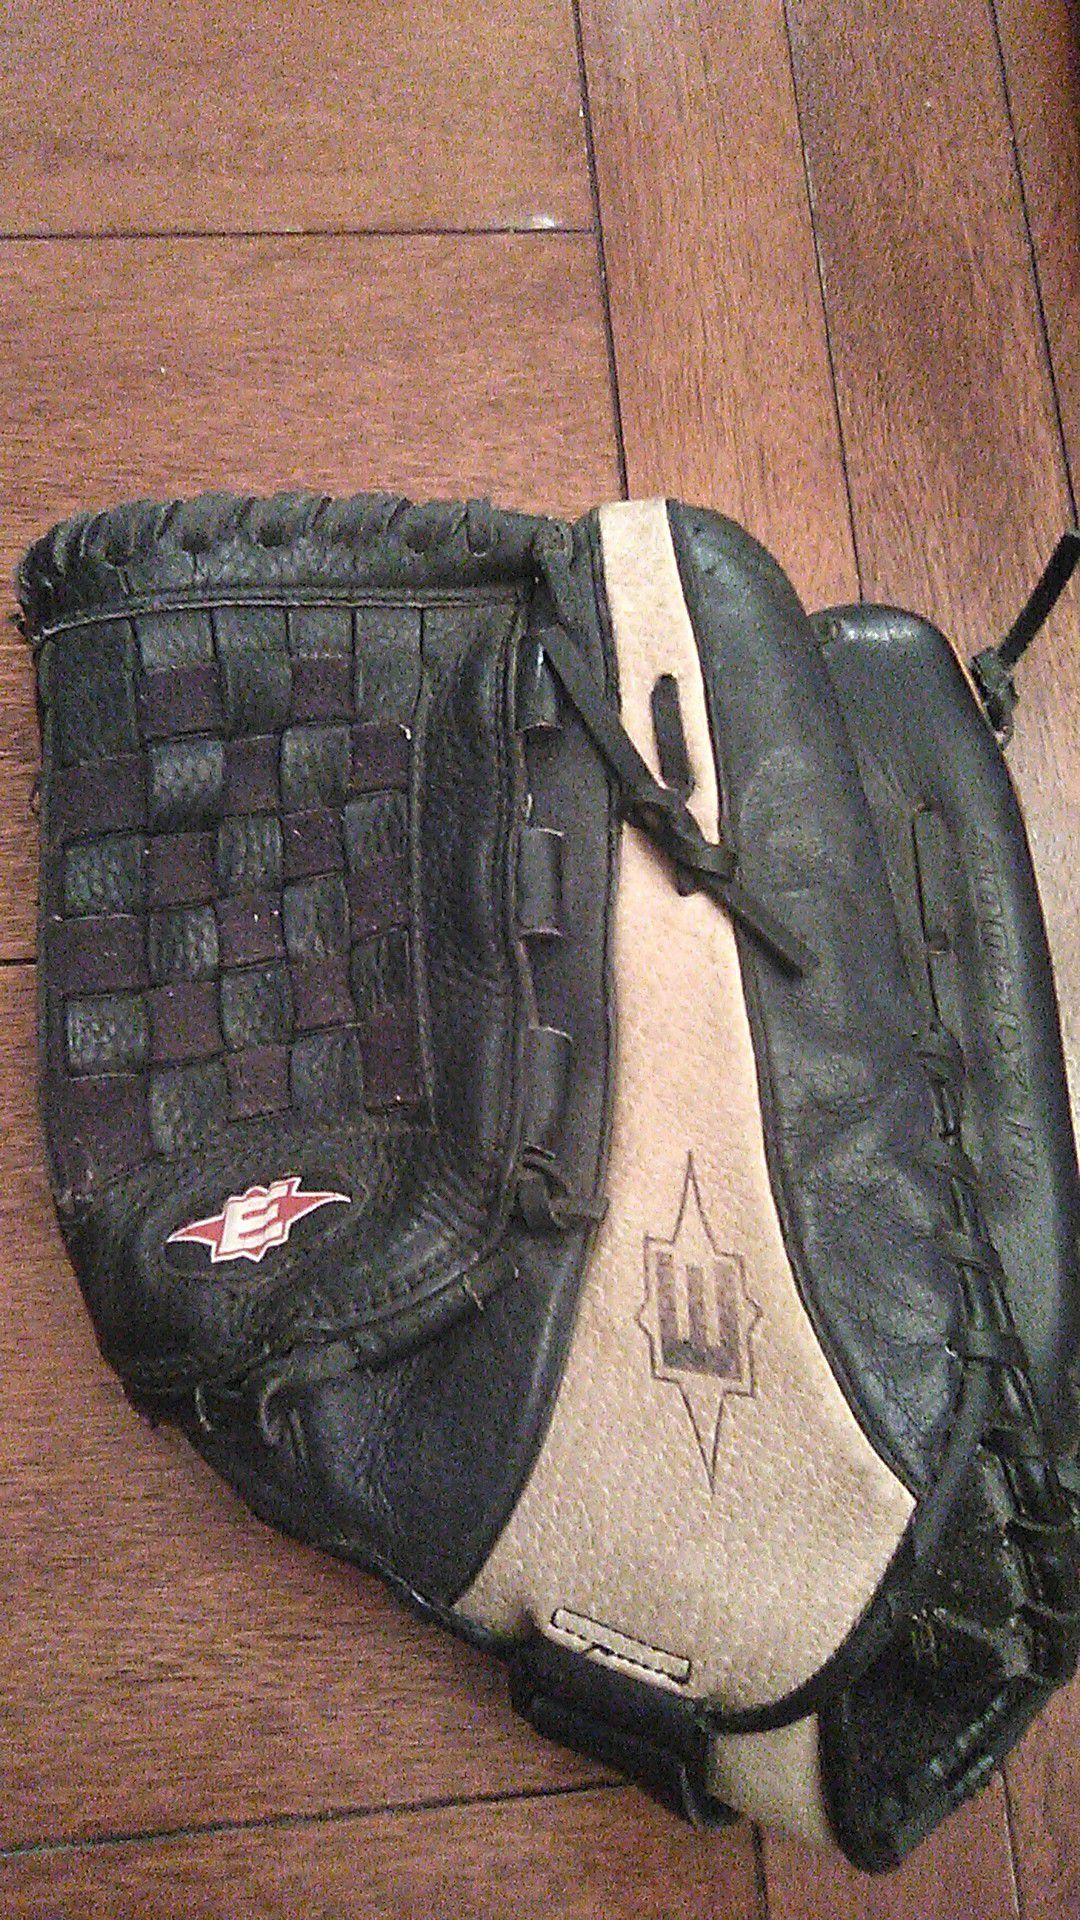 Baseball or softball glove size 14"